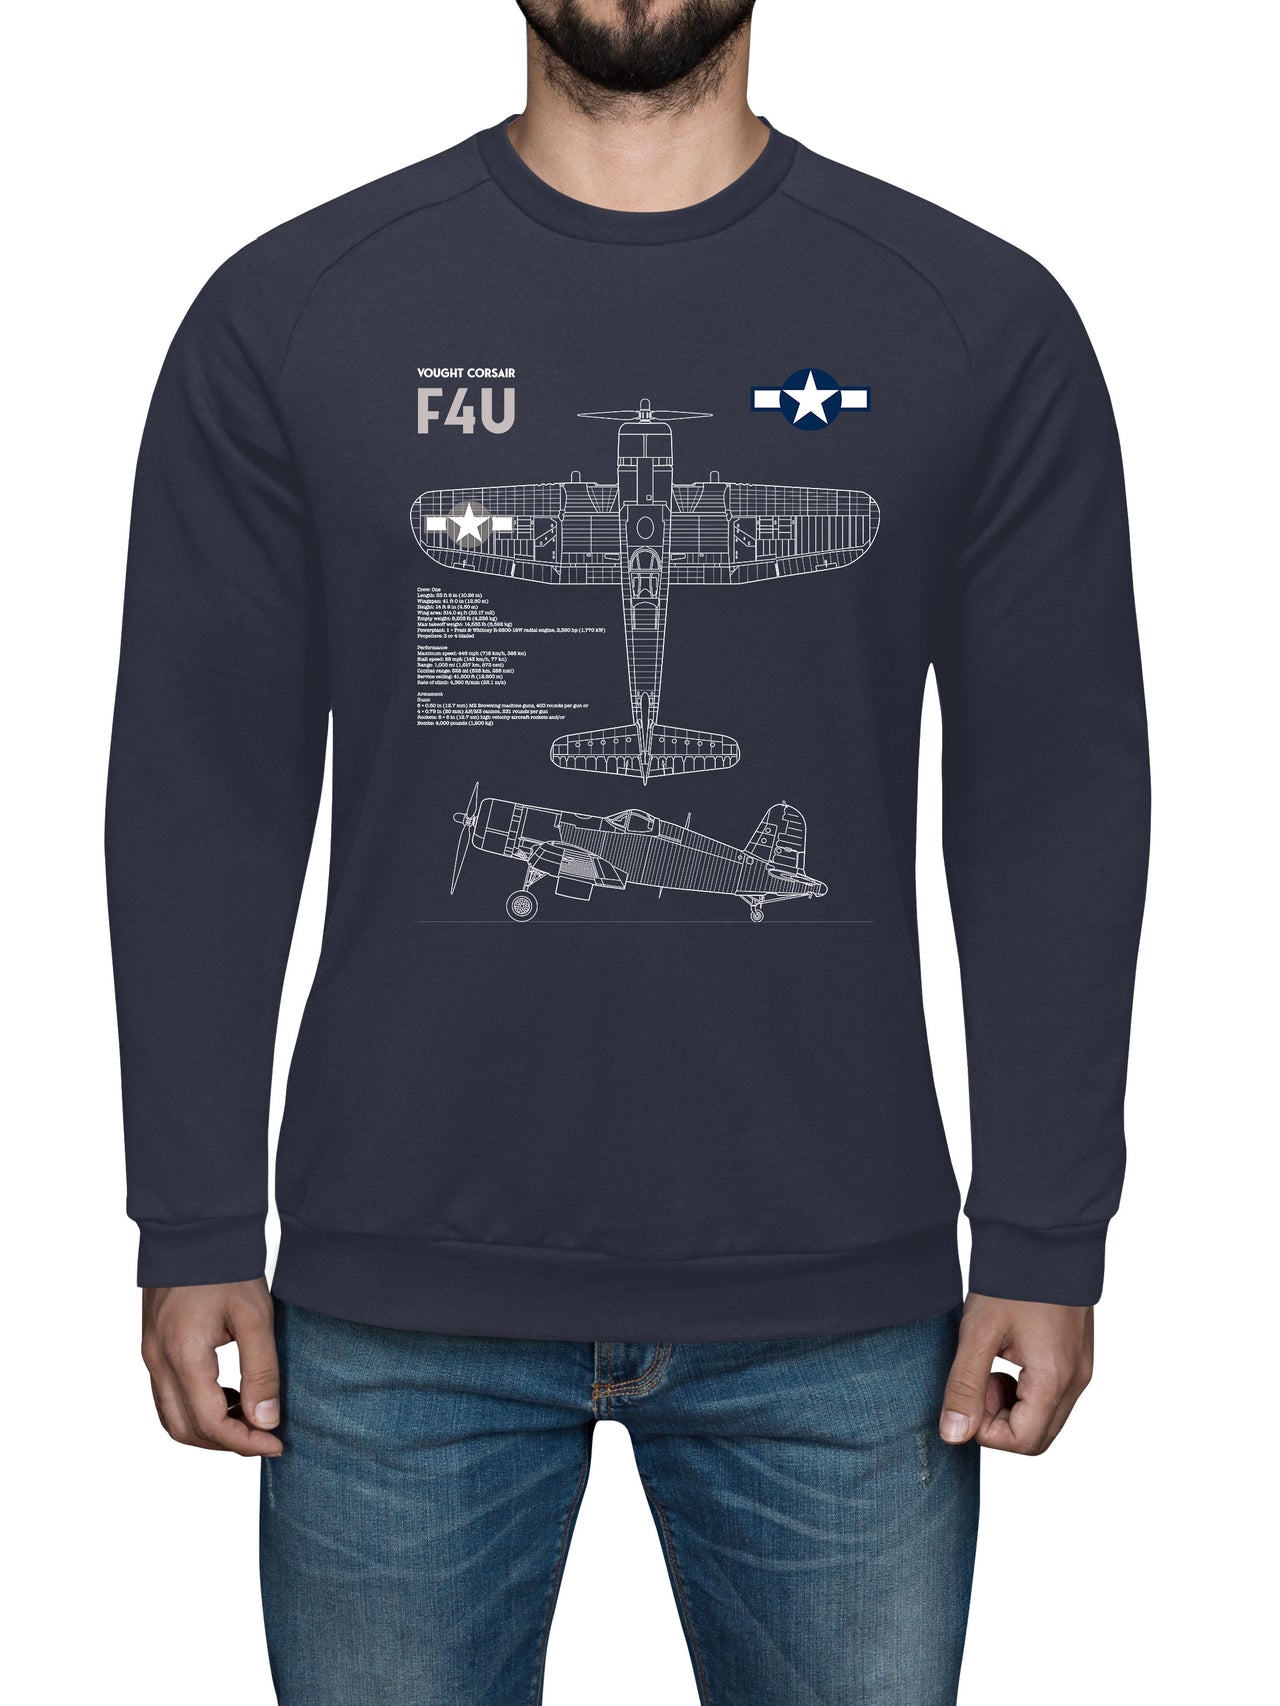 F4U Corsair - Sweat Shirt